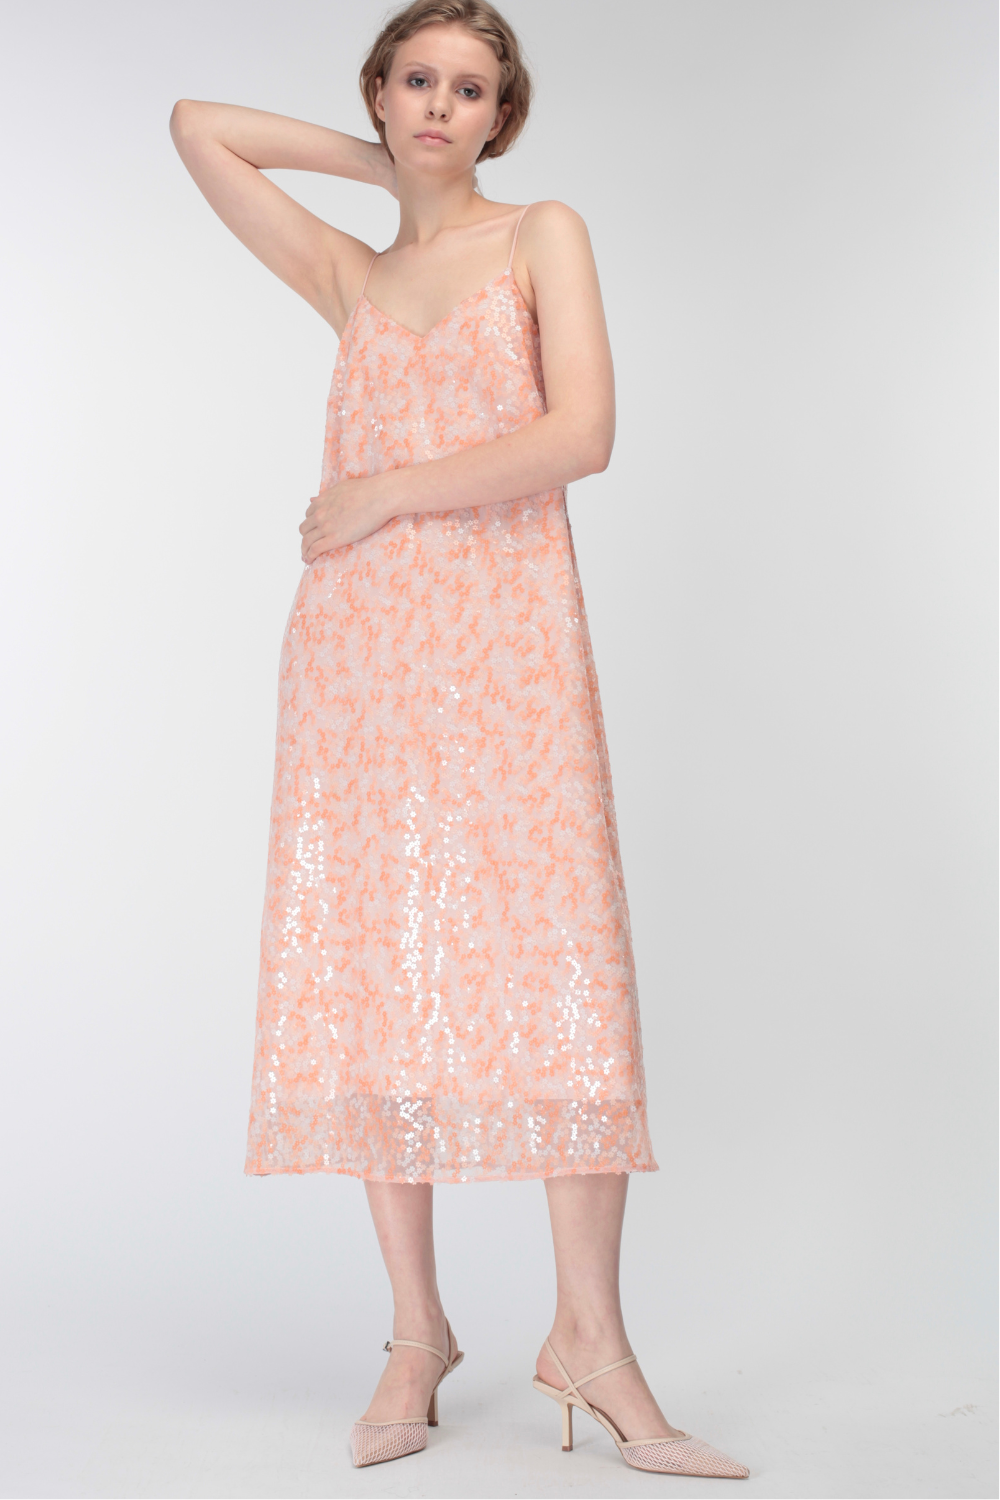 Сукня на тонких бретелях з паєтками, персикове (MissSecret) DR-031-рожевий